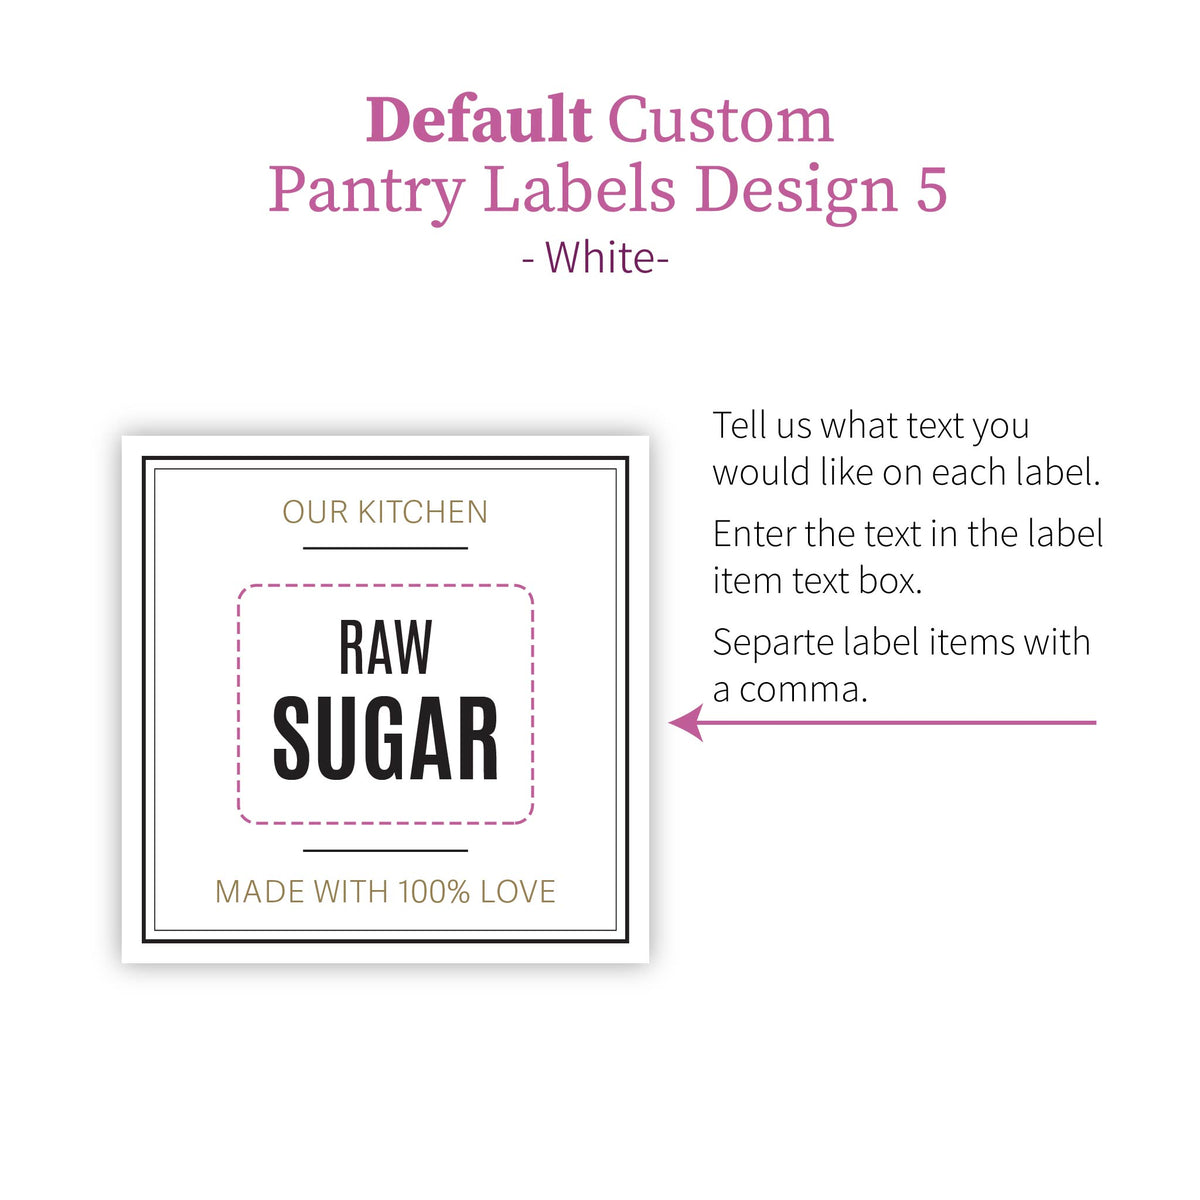 Personalised Custom Pantry Labels - Design 5